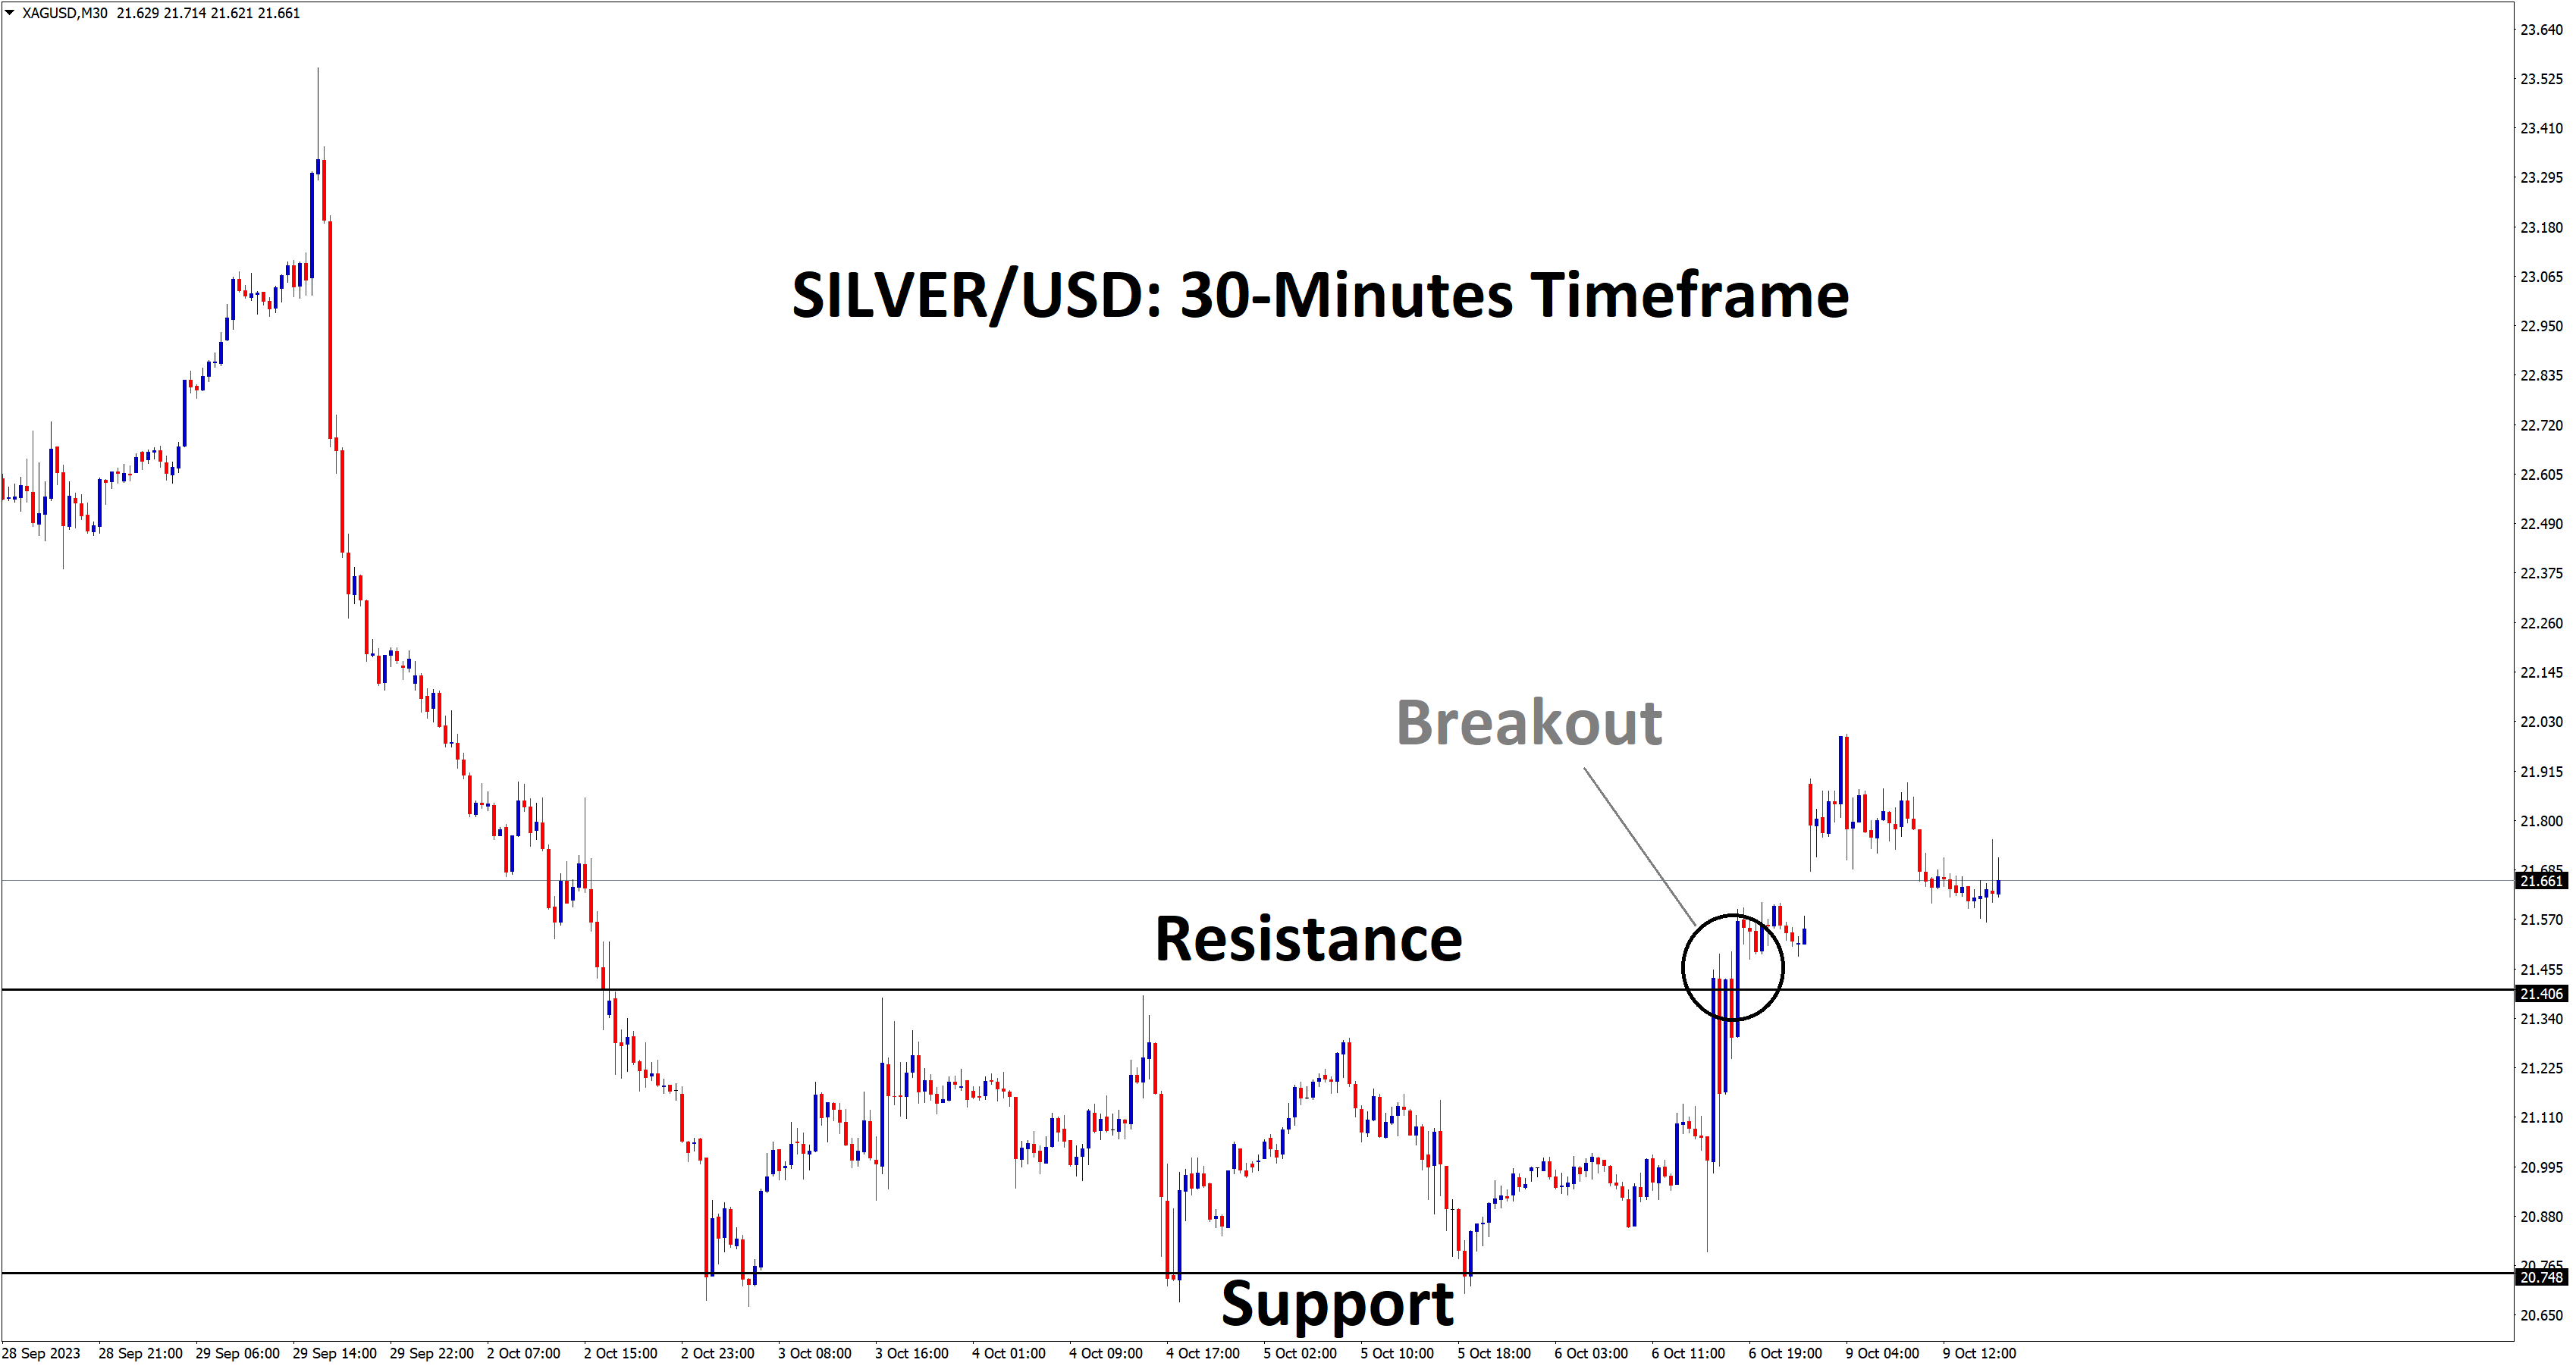 silver broken minor resistance in the 30 min tf